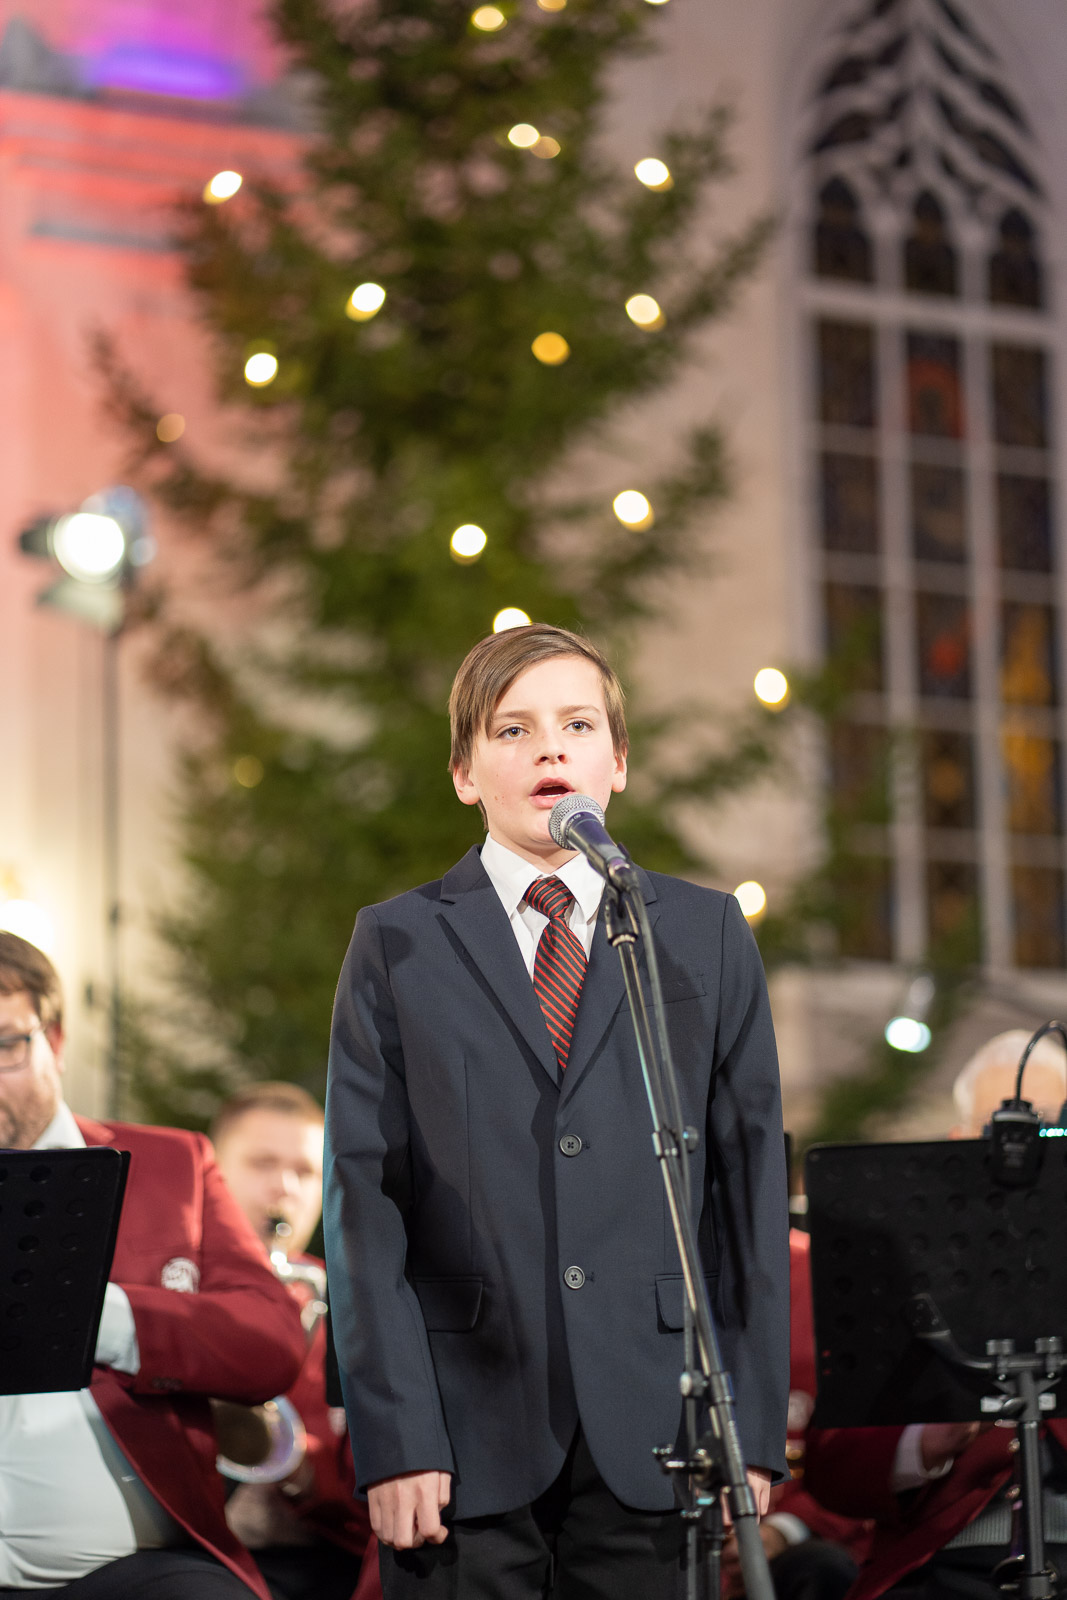 15.12.2019 Jõulukontsert "Taevavärvi" Tallinna Jaani kirikus